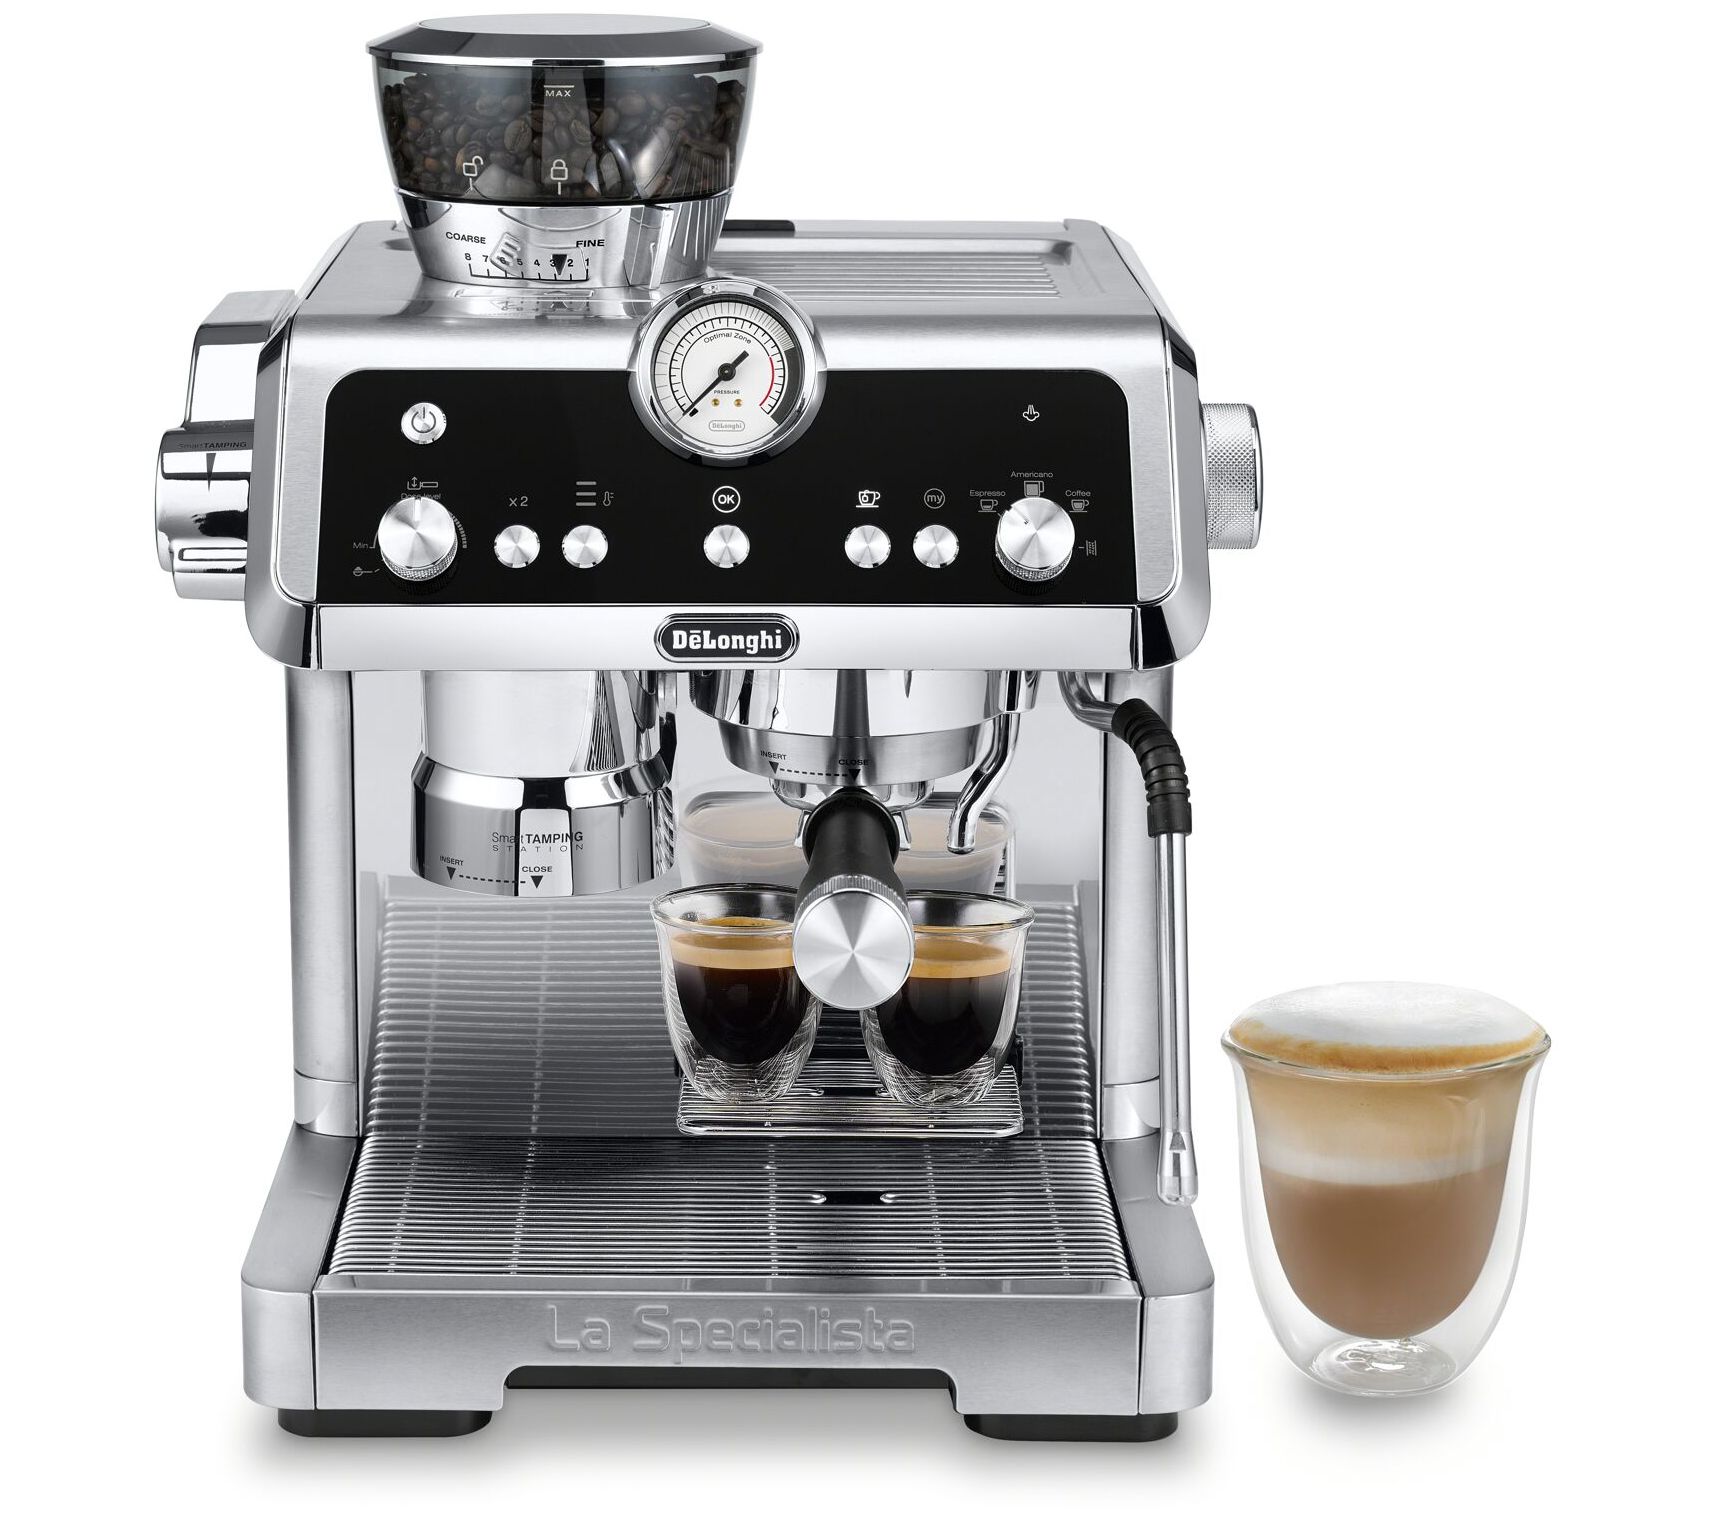 De'longhi Coffee Machine - Delonghi Coffee Machine Manufacturer from Chennai